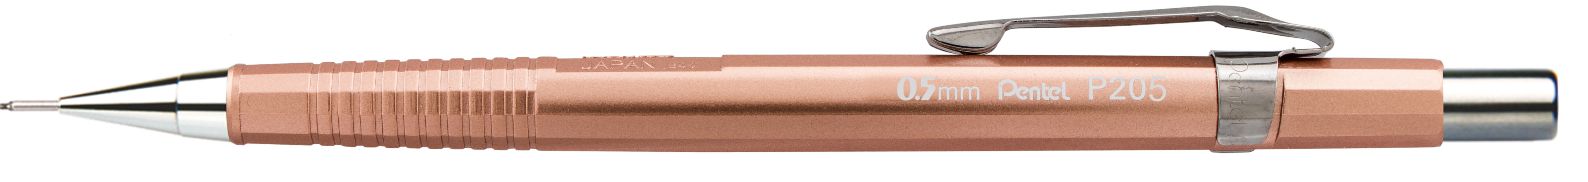 Lapiseira Pentel Sharp 0.7 P200 Bronze Metal